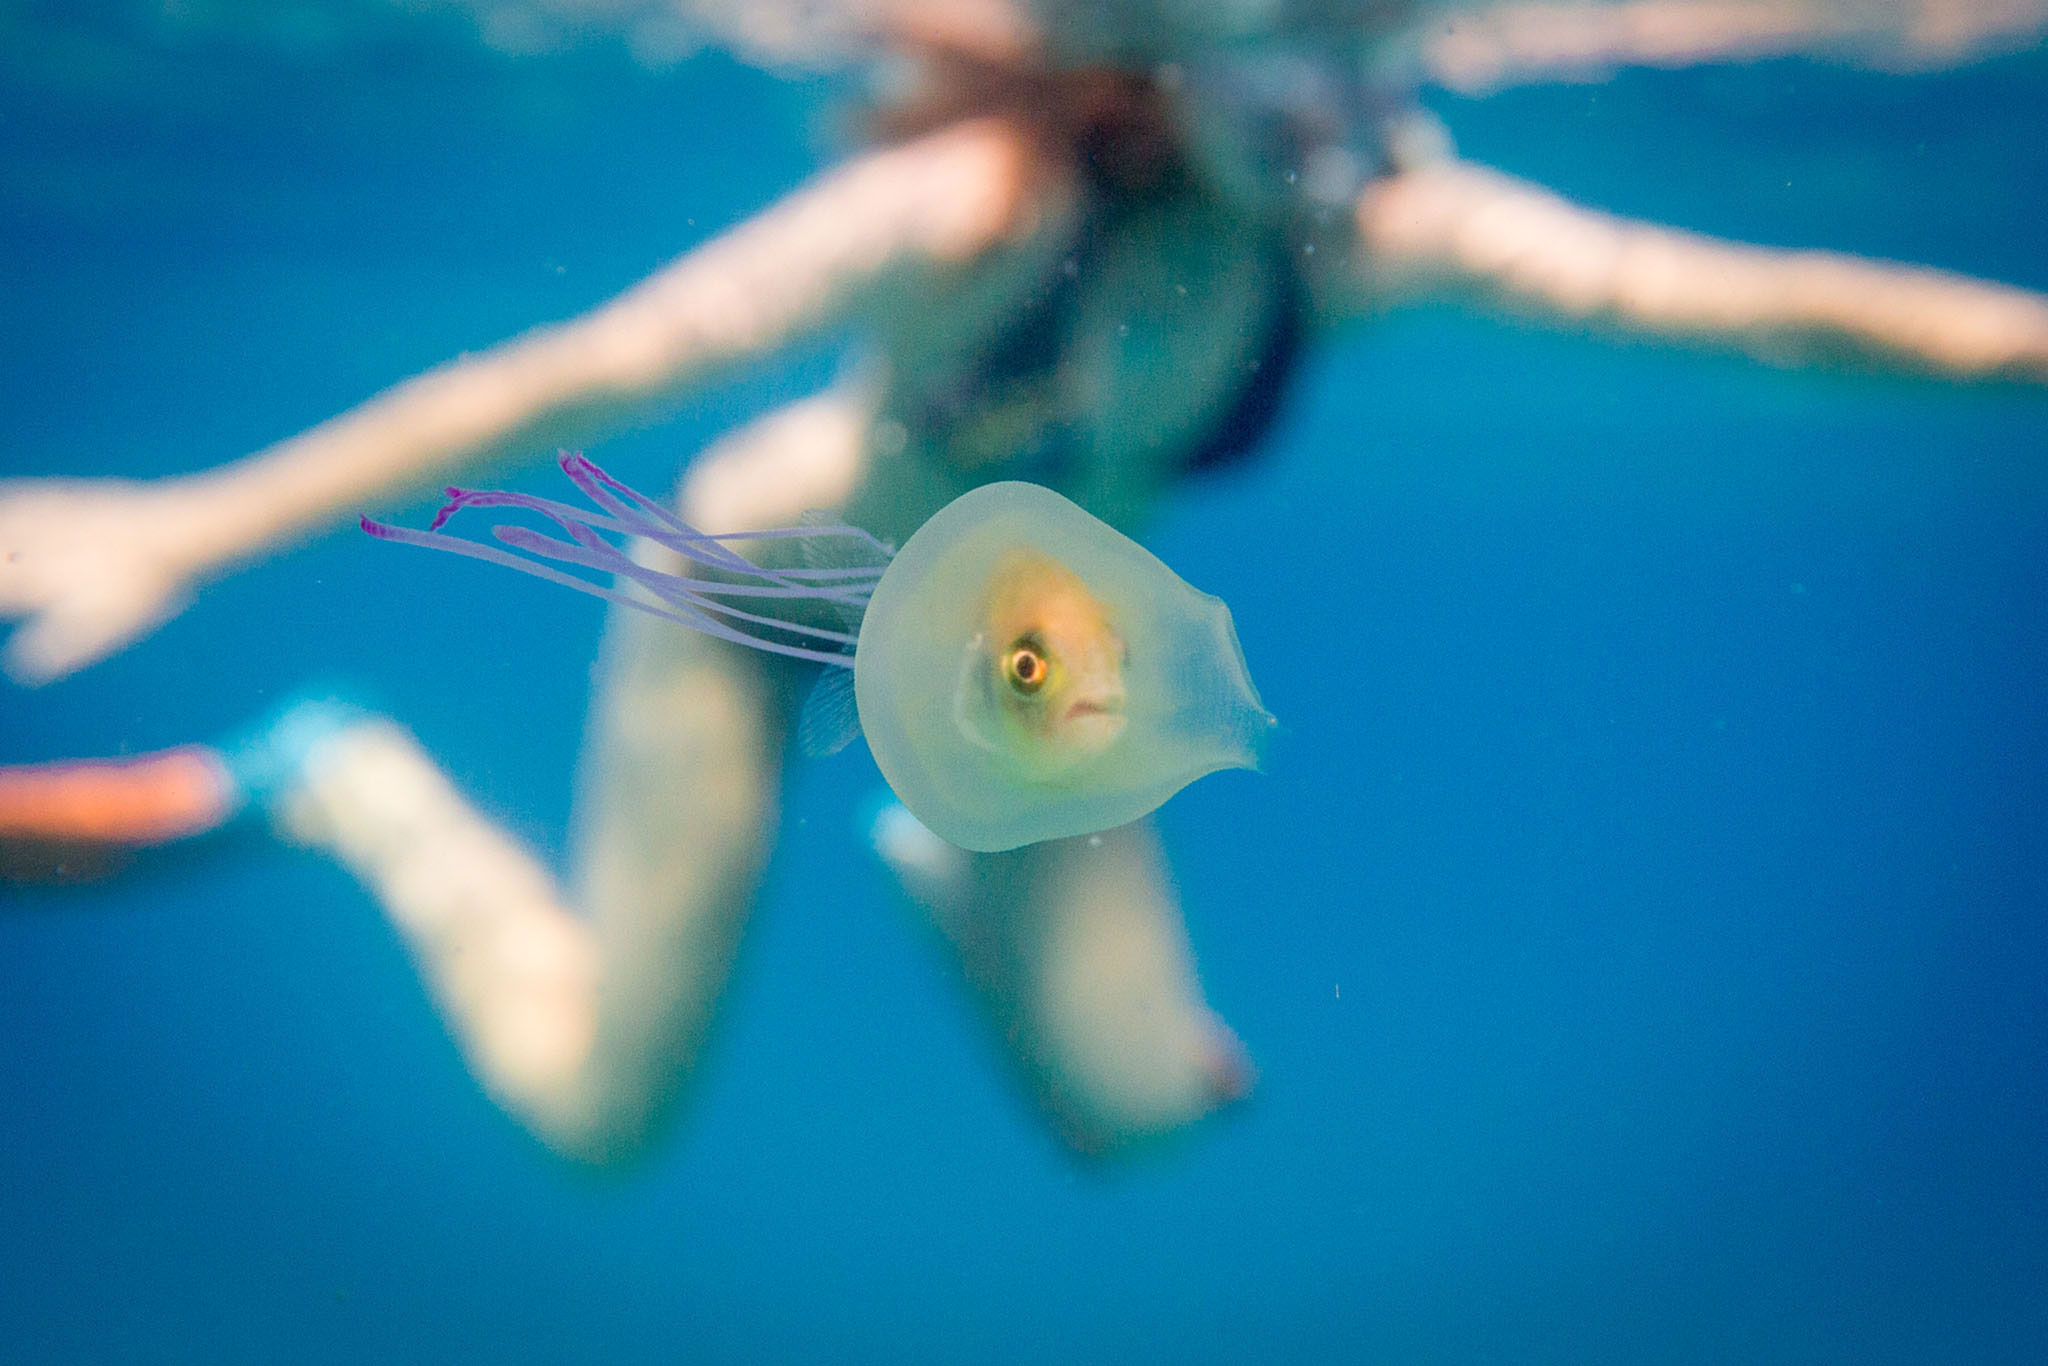 Living Fish Found Inside Jellyfish in Bizarre Underwater Scene